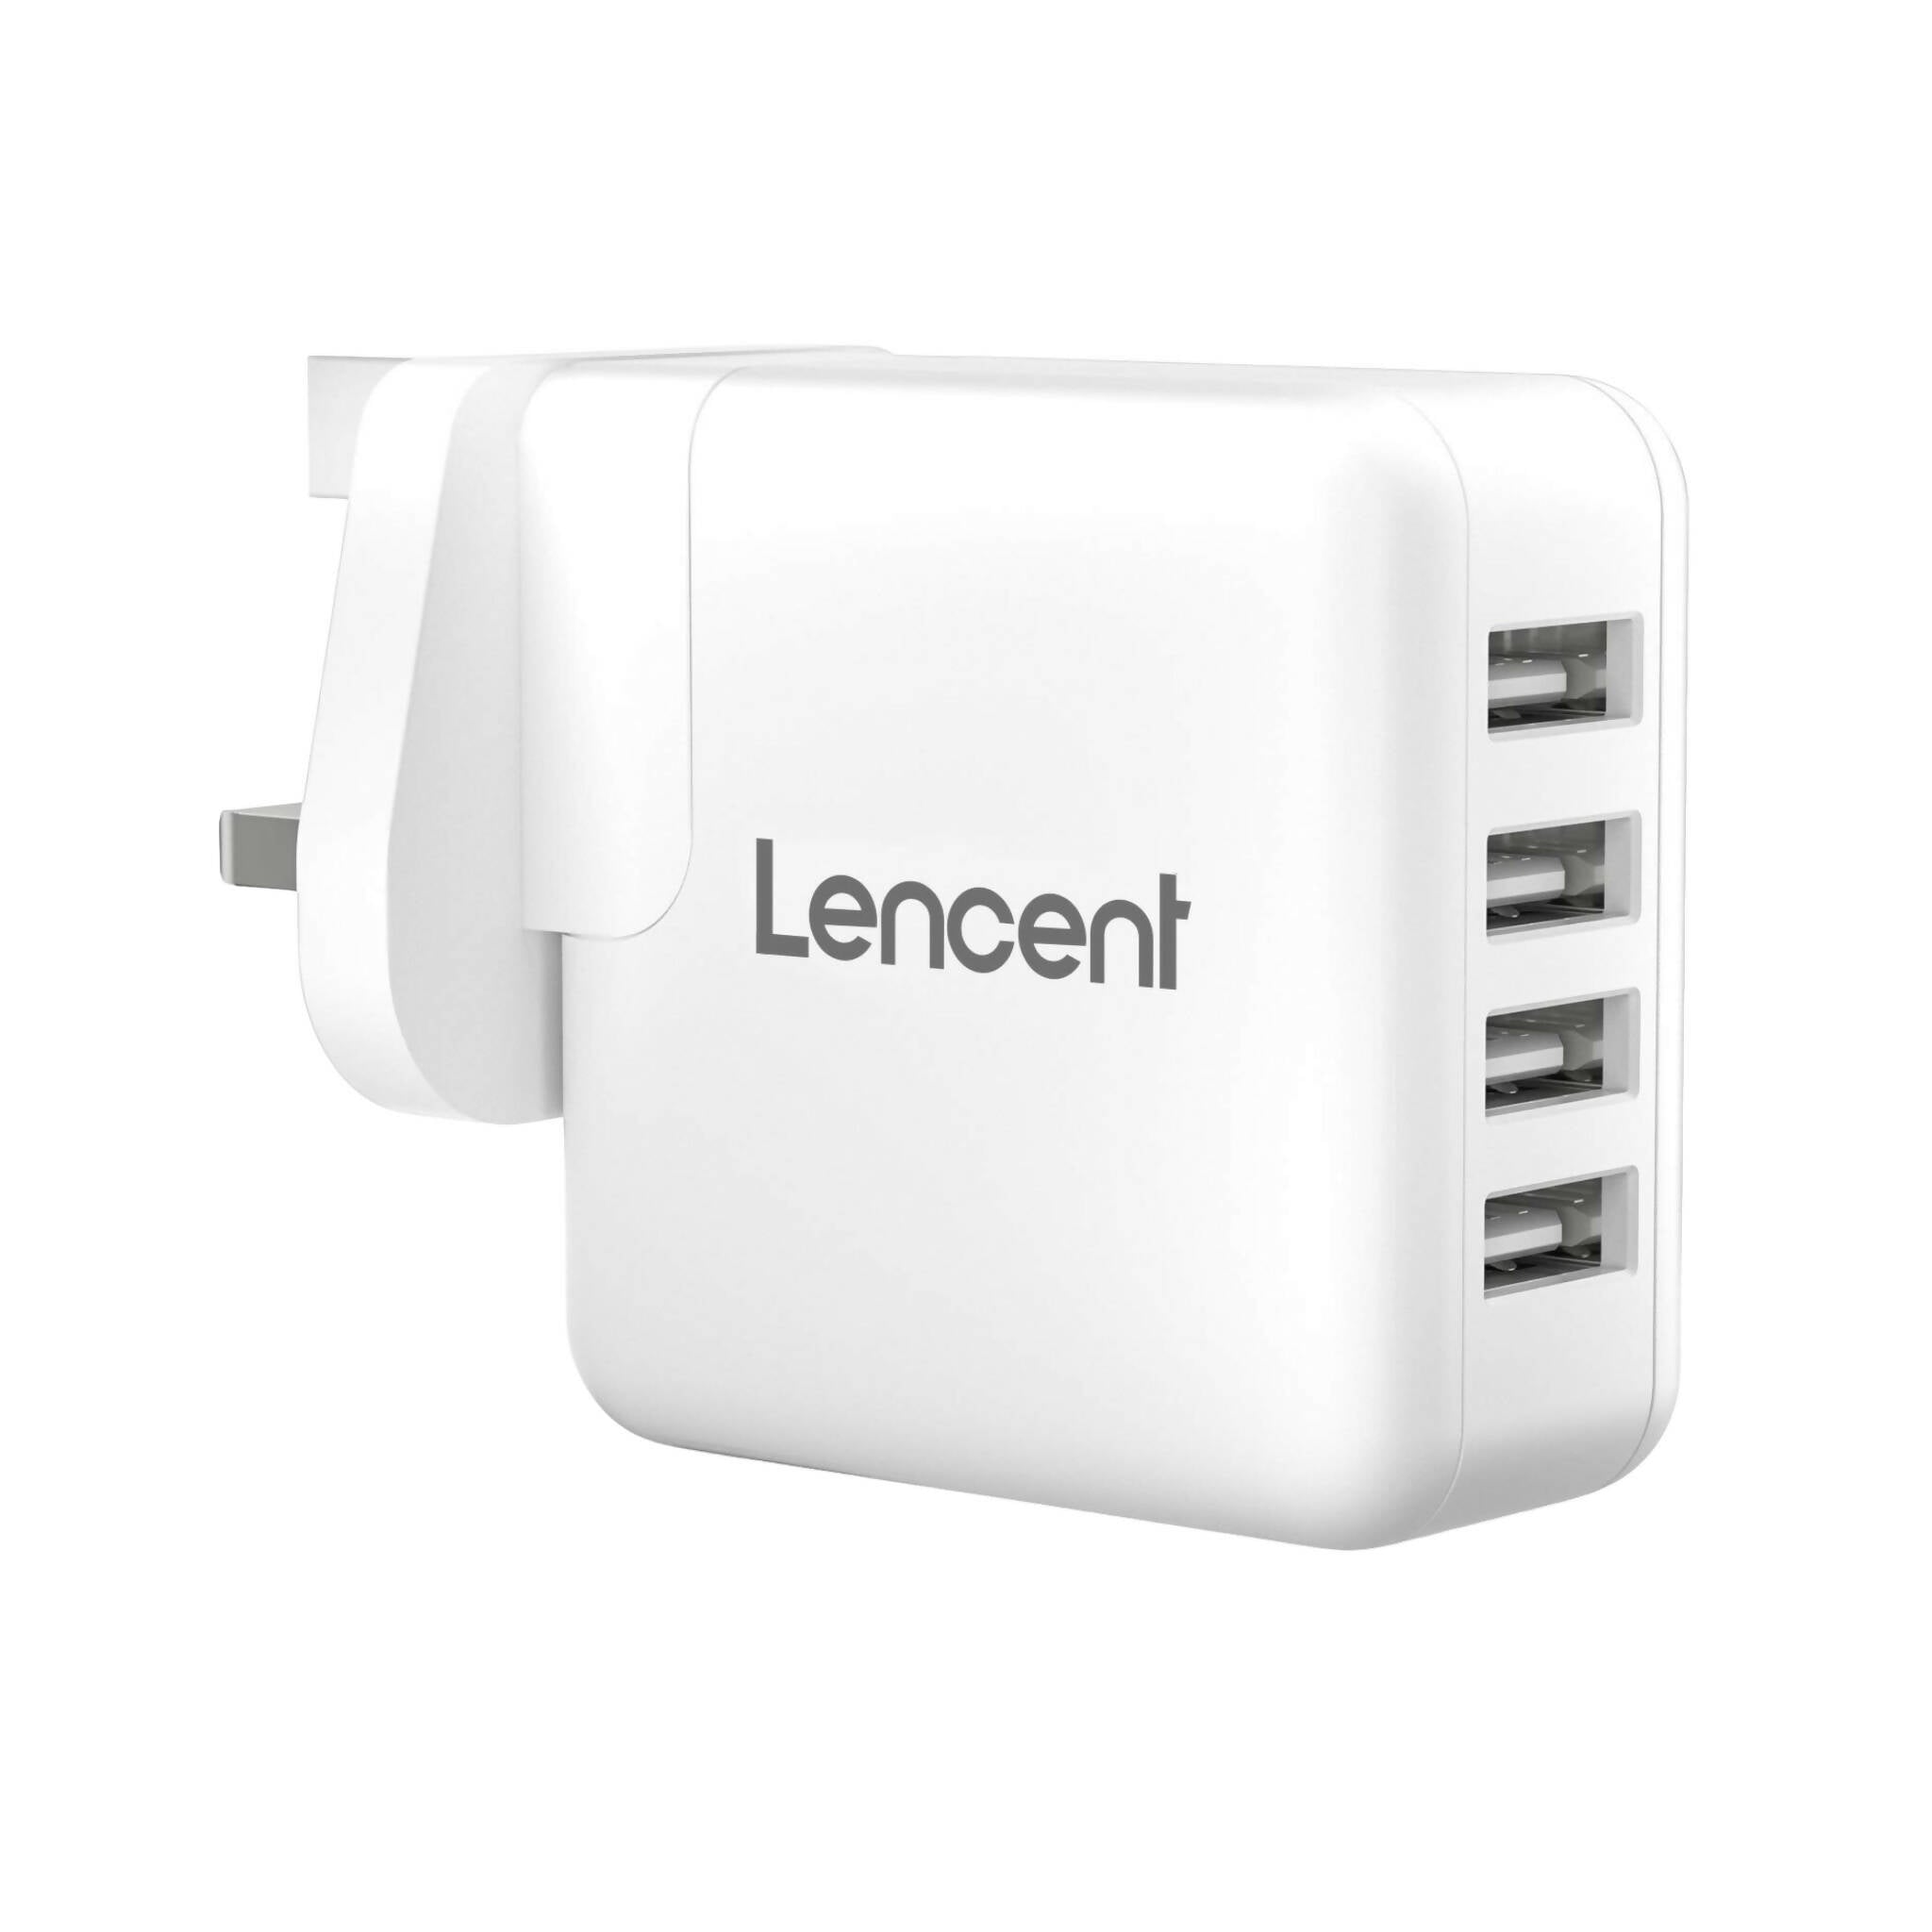 Lencent USB Plug, 4-Port 24W/4.8A Charger, Smart IC Technology